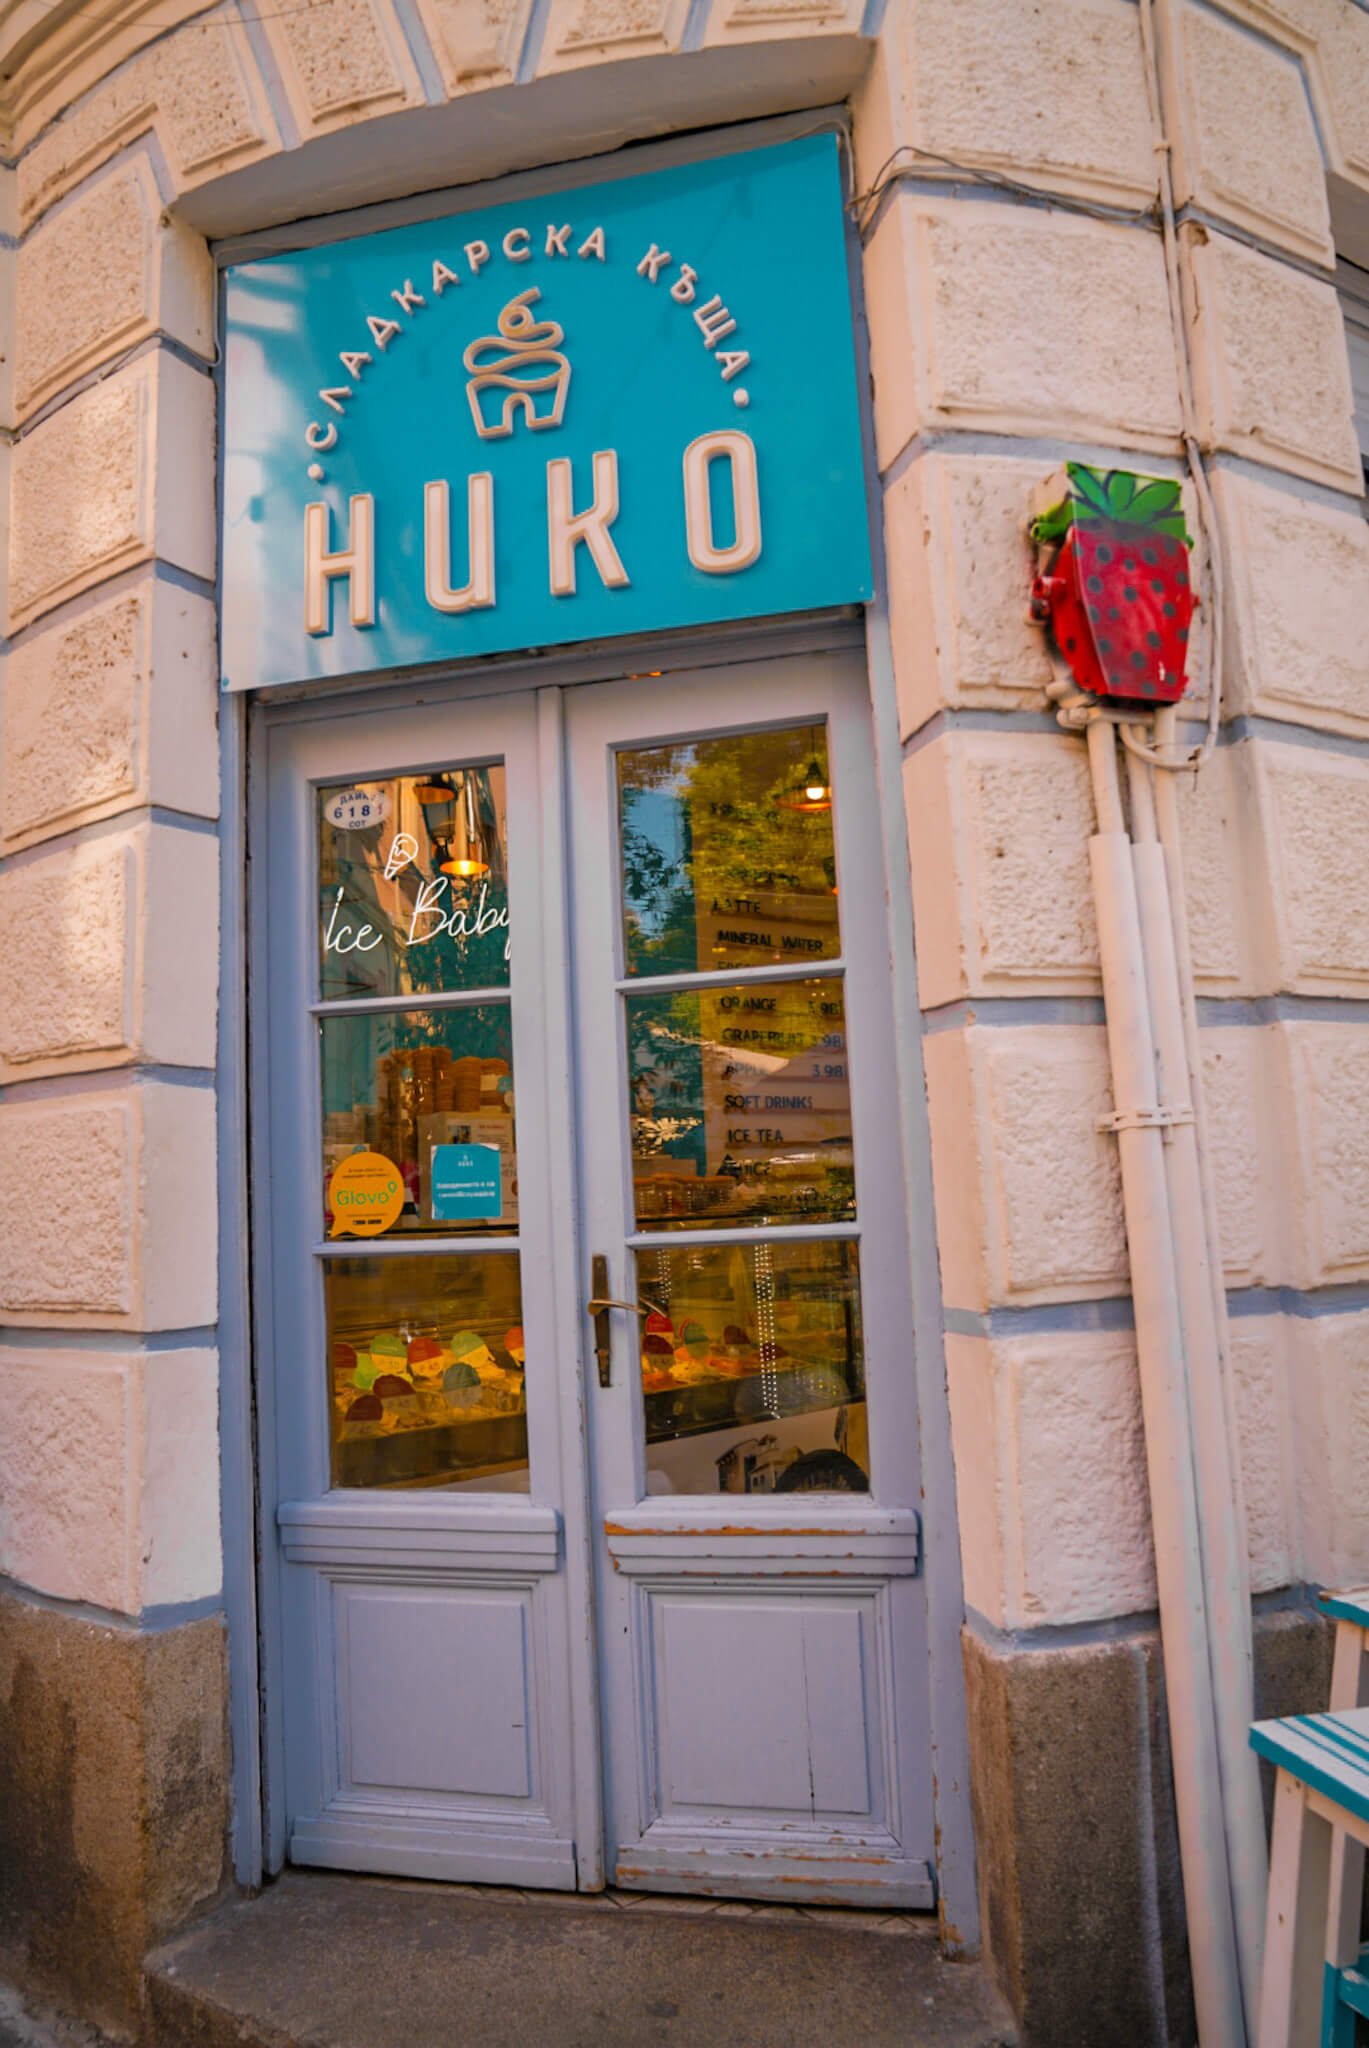 Huko ice cream shop in Plovdiv, Bulgaria